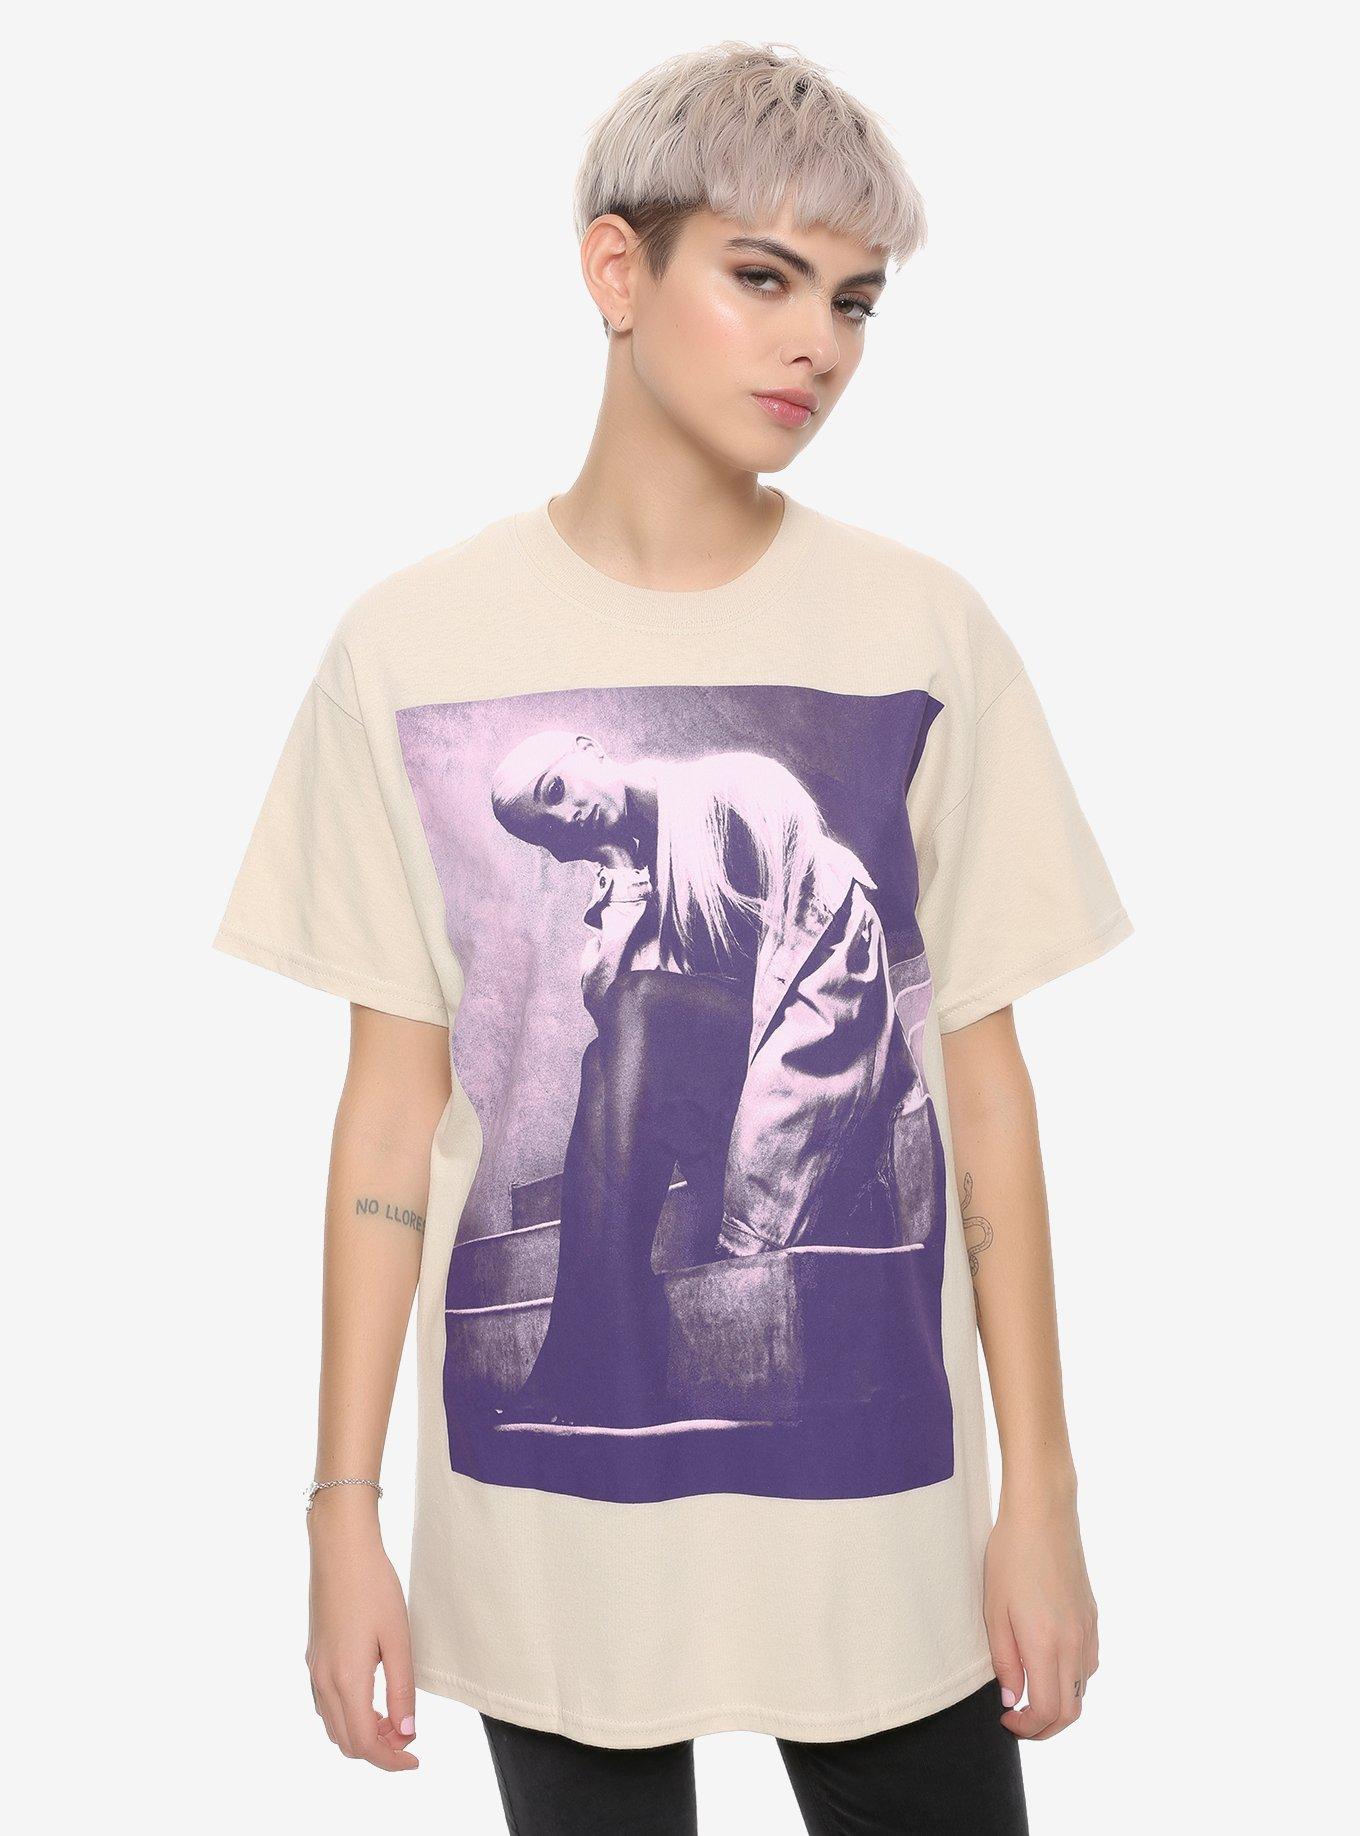 Ariana Grande Purple Photo Girls T-Shirt, PURPLE, hi-res